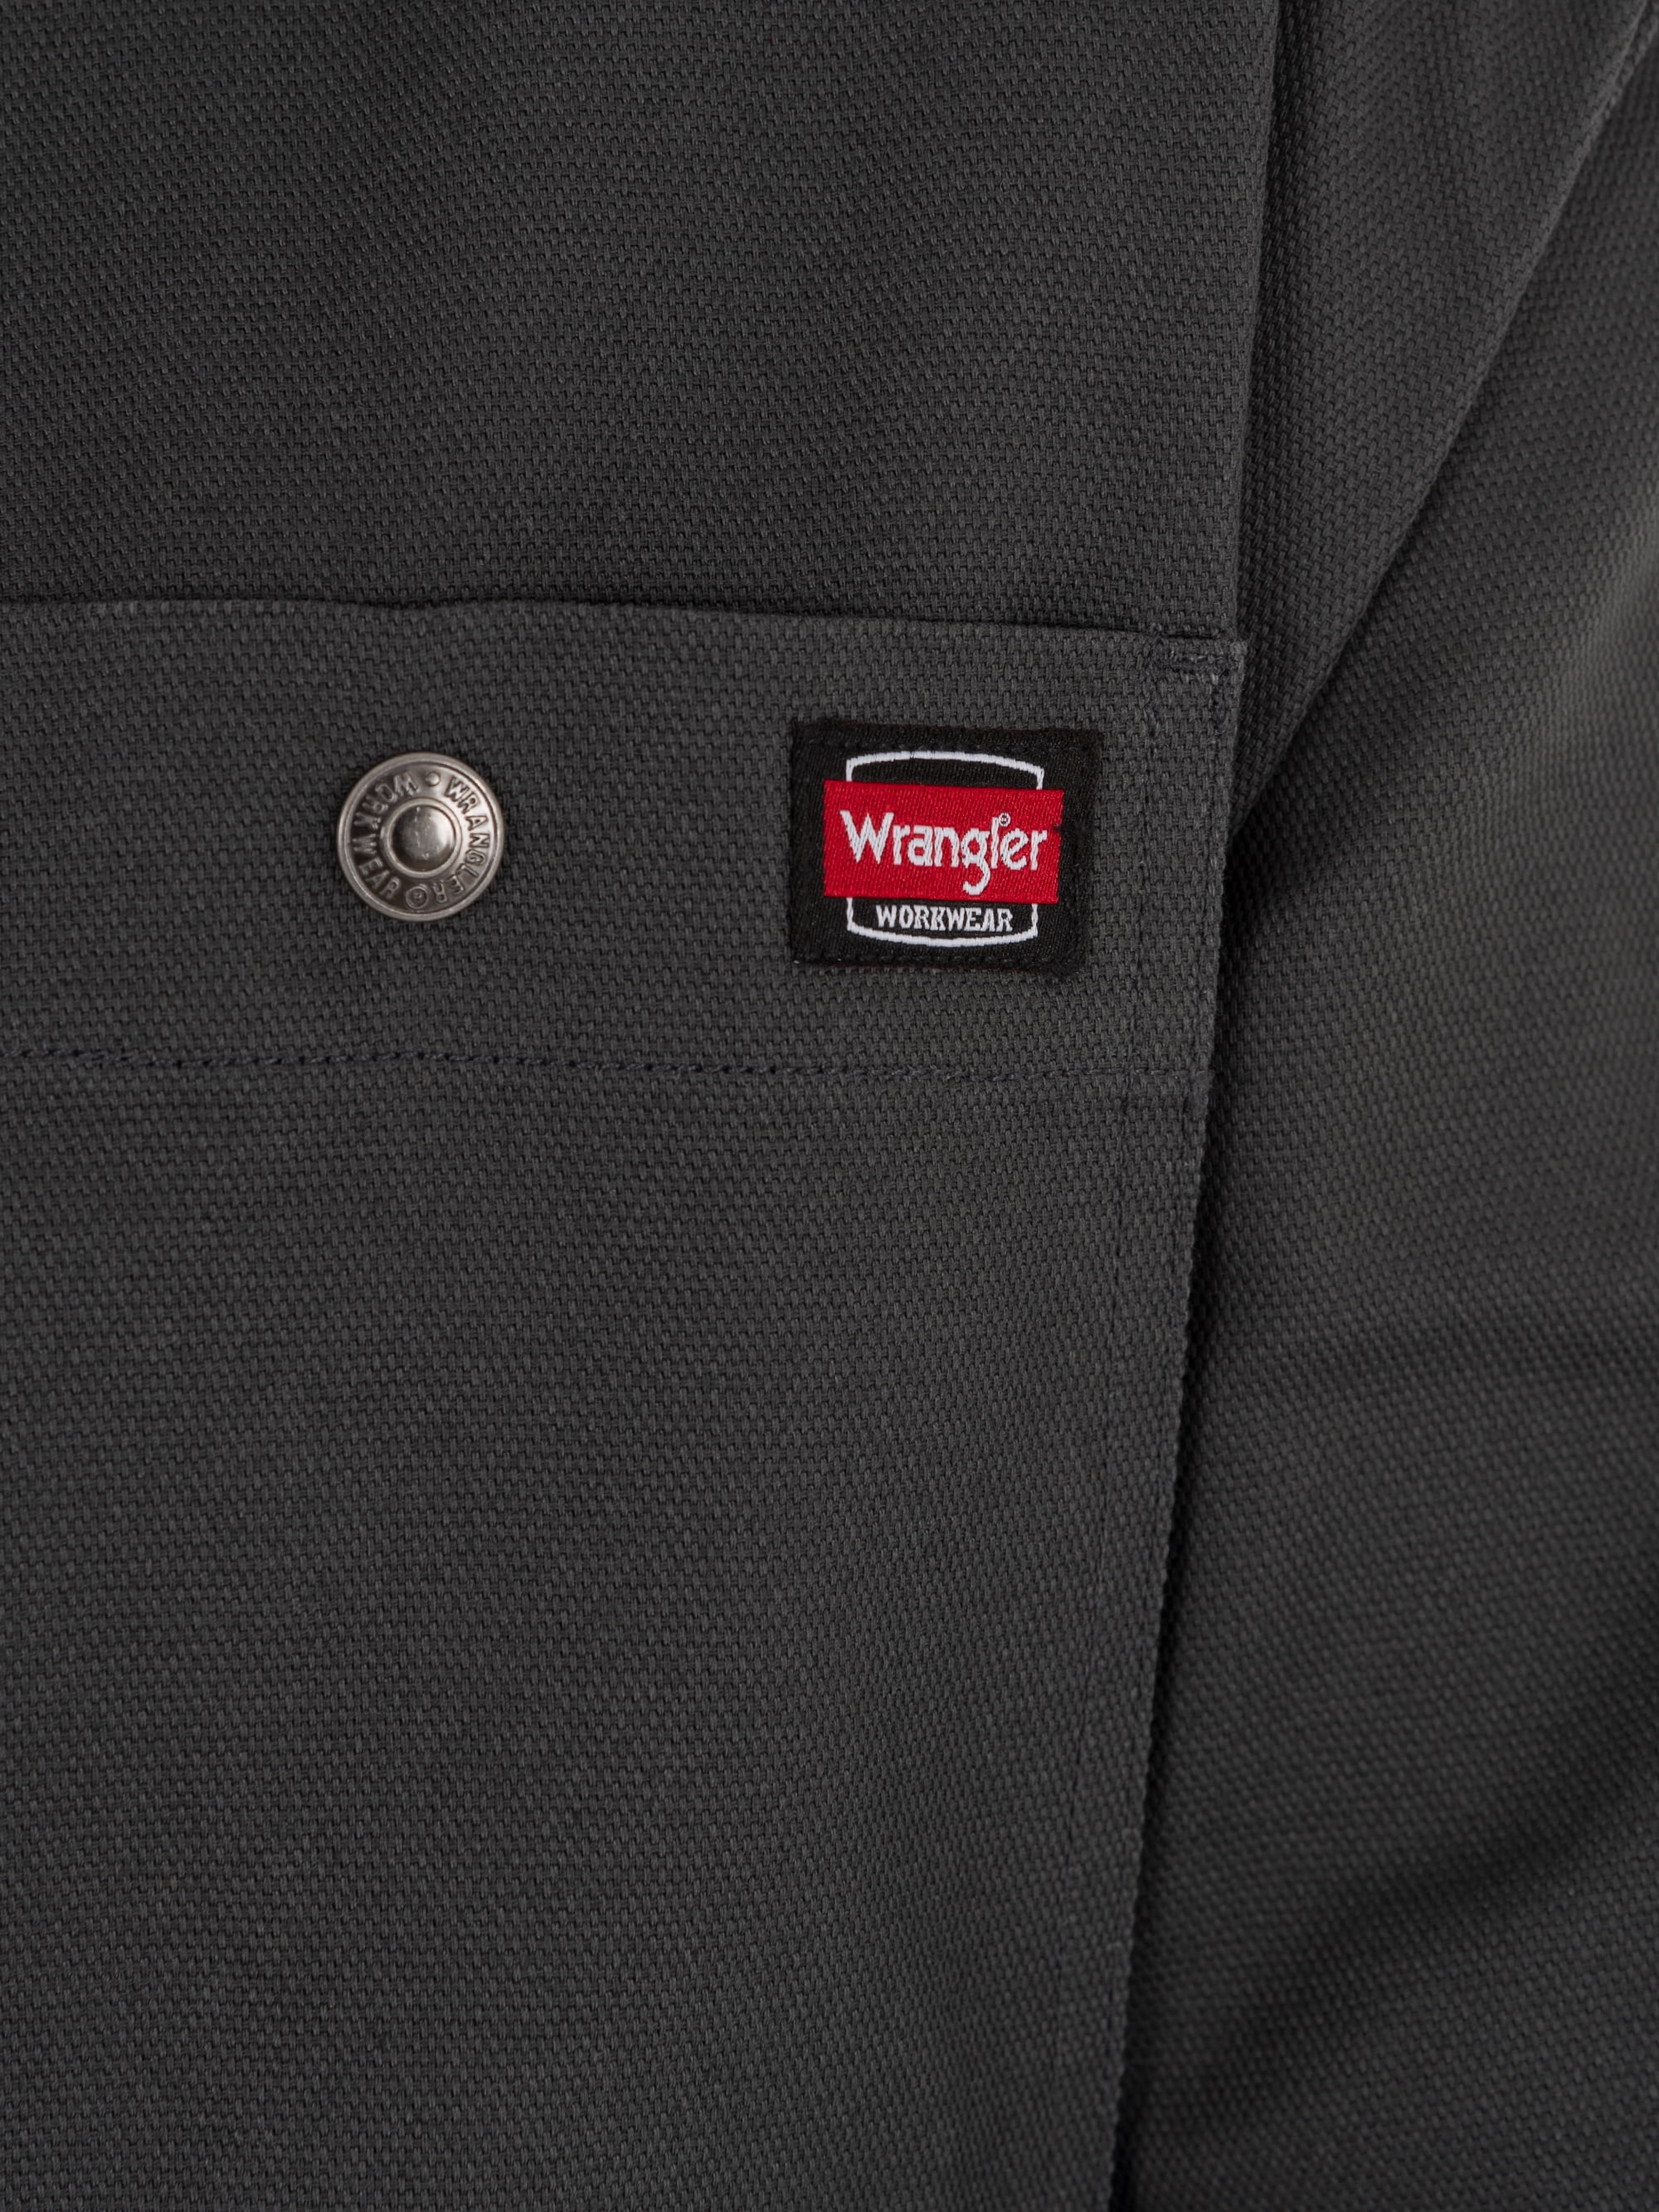 Wrangler Workwear Men's Unlined Shirt Jacket 